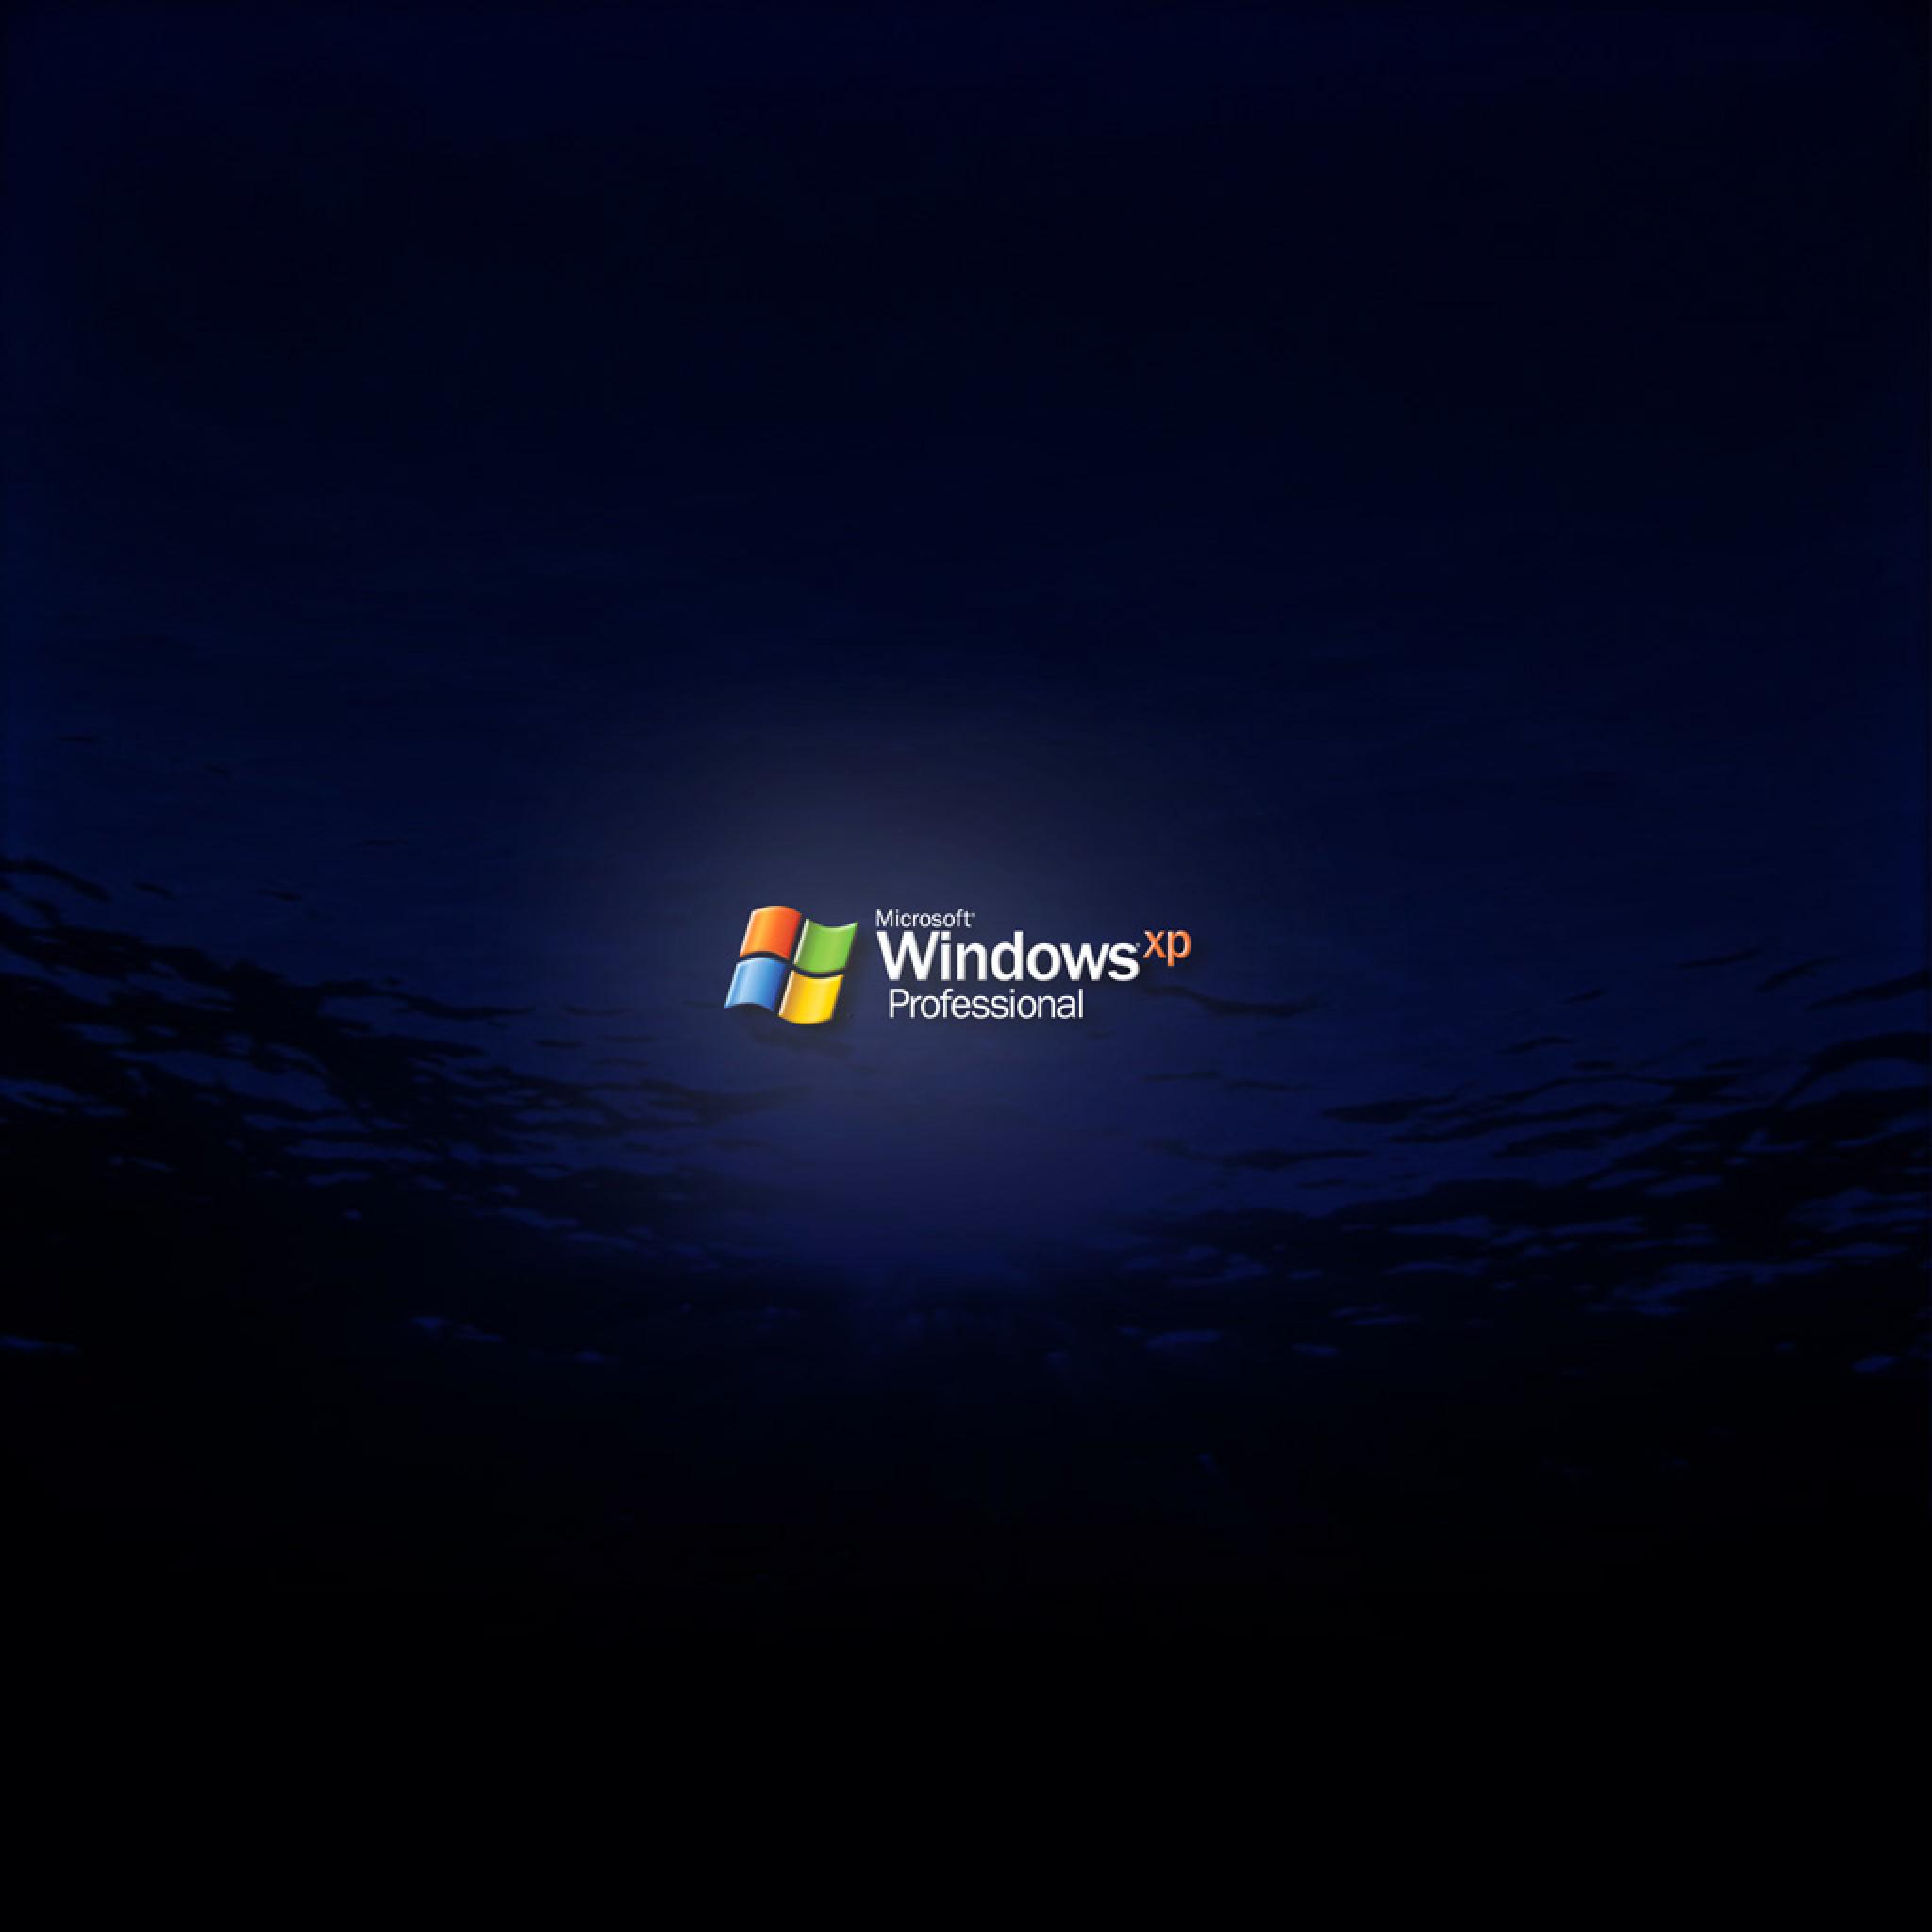 Computer Brand New Ipad Windows Xp Pro Dark Water Wallpaper For